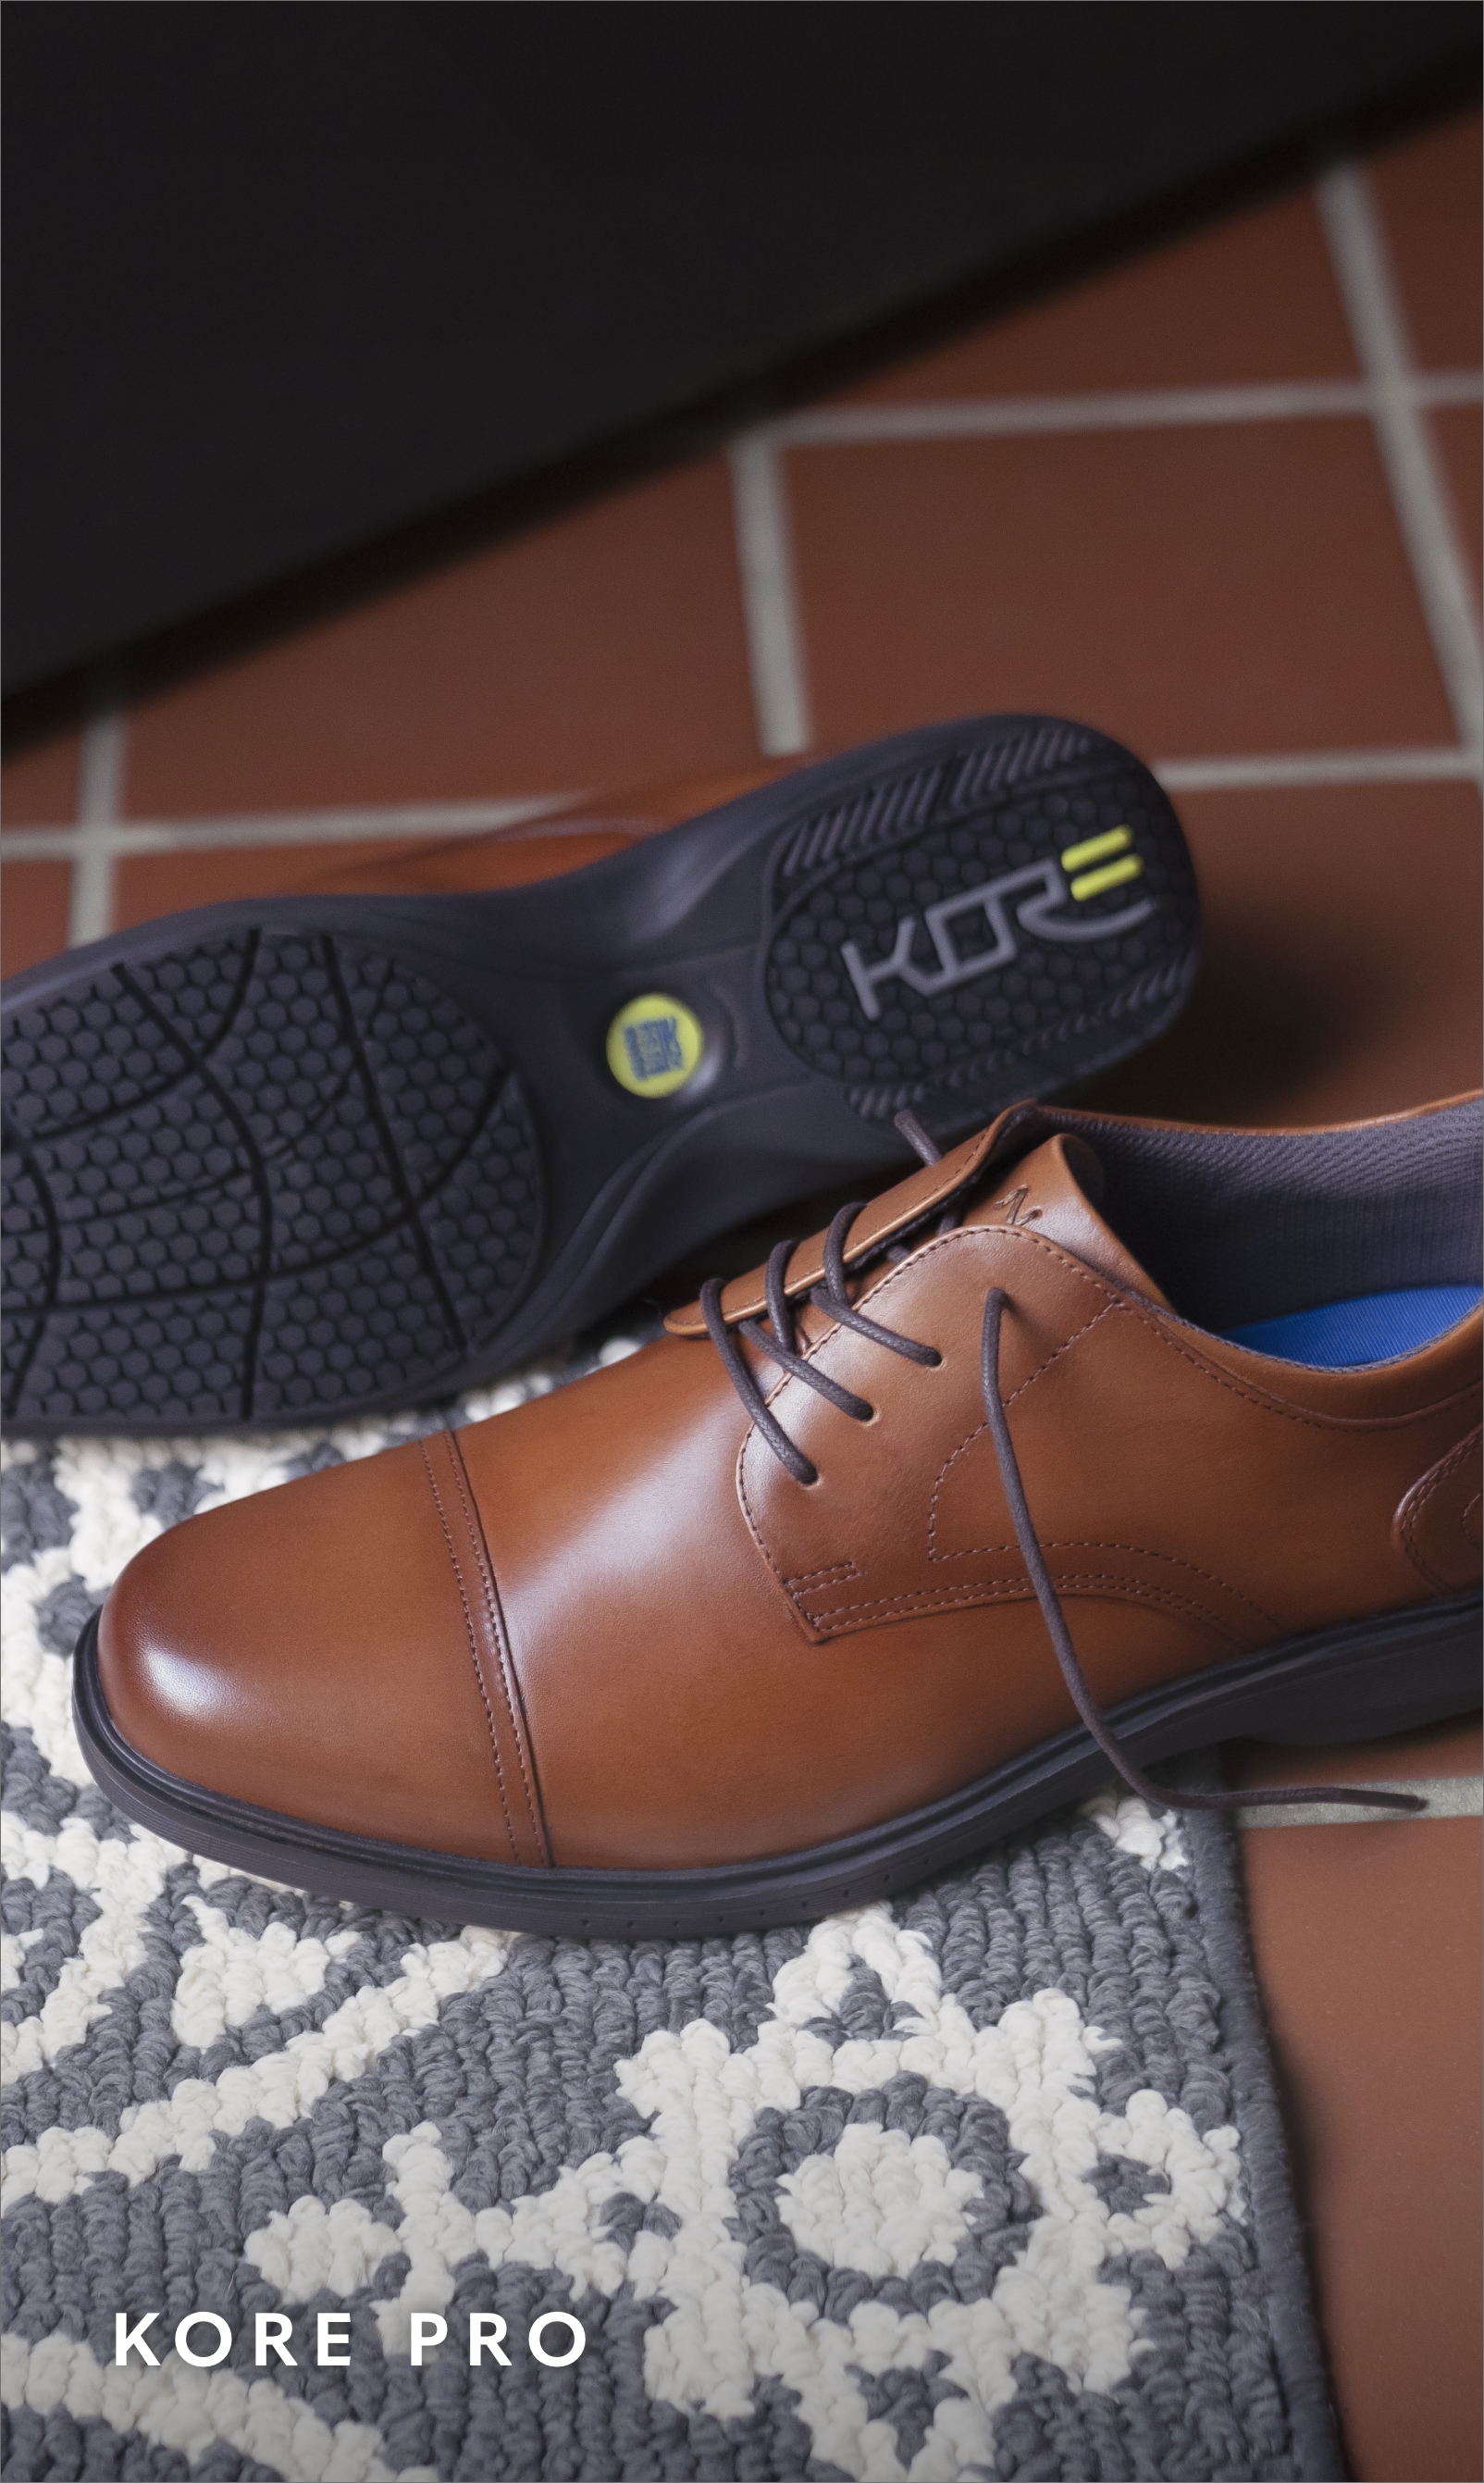 Men's Dress Shoes category. Image features the Kore Pro Cap Toe Oxford in cognac. 